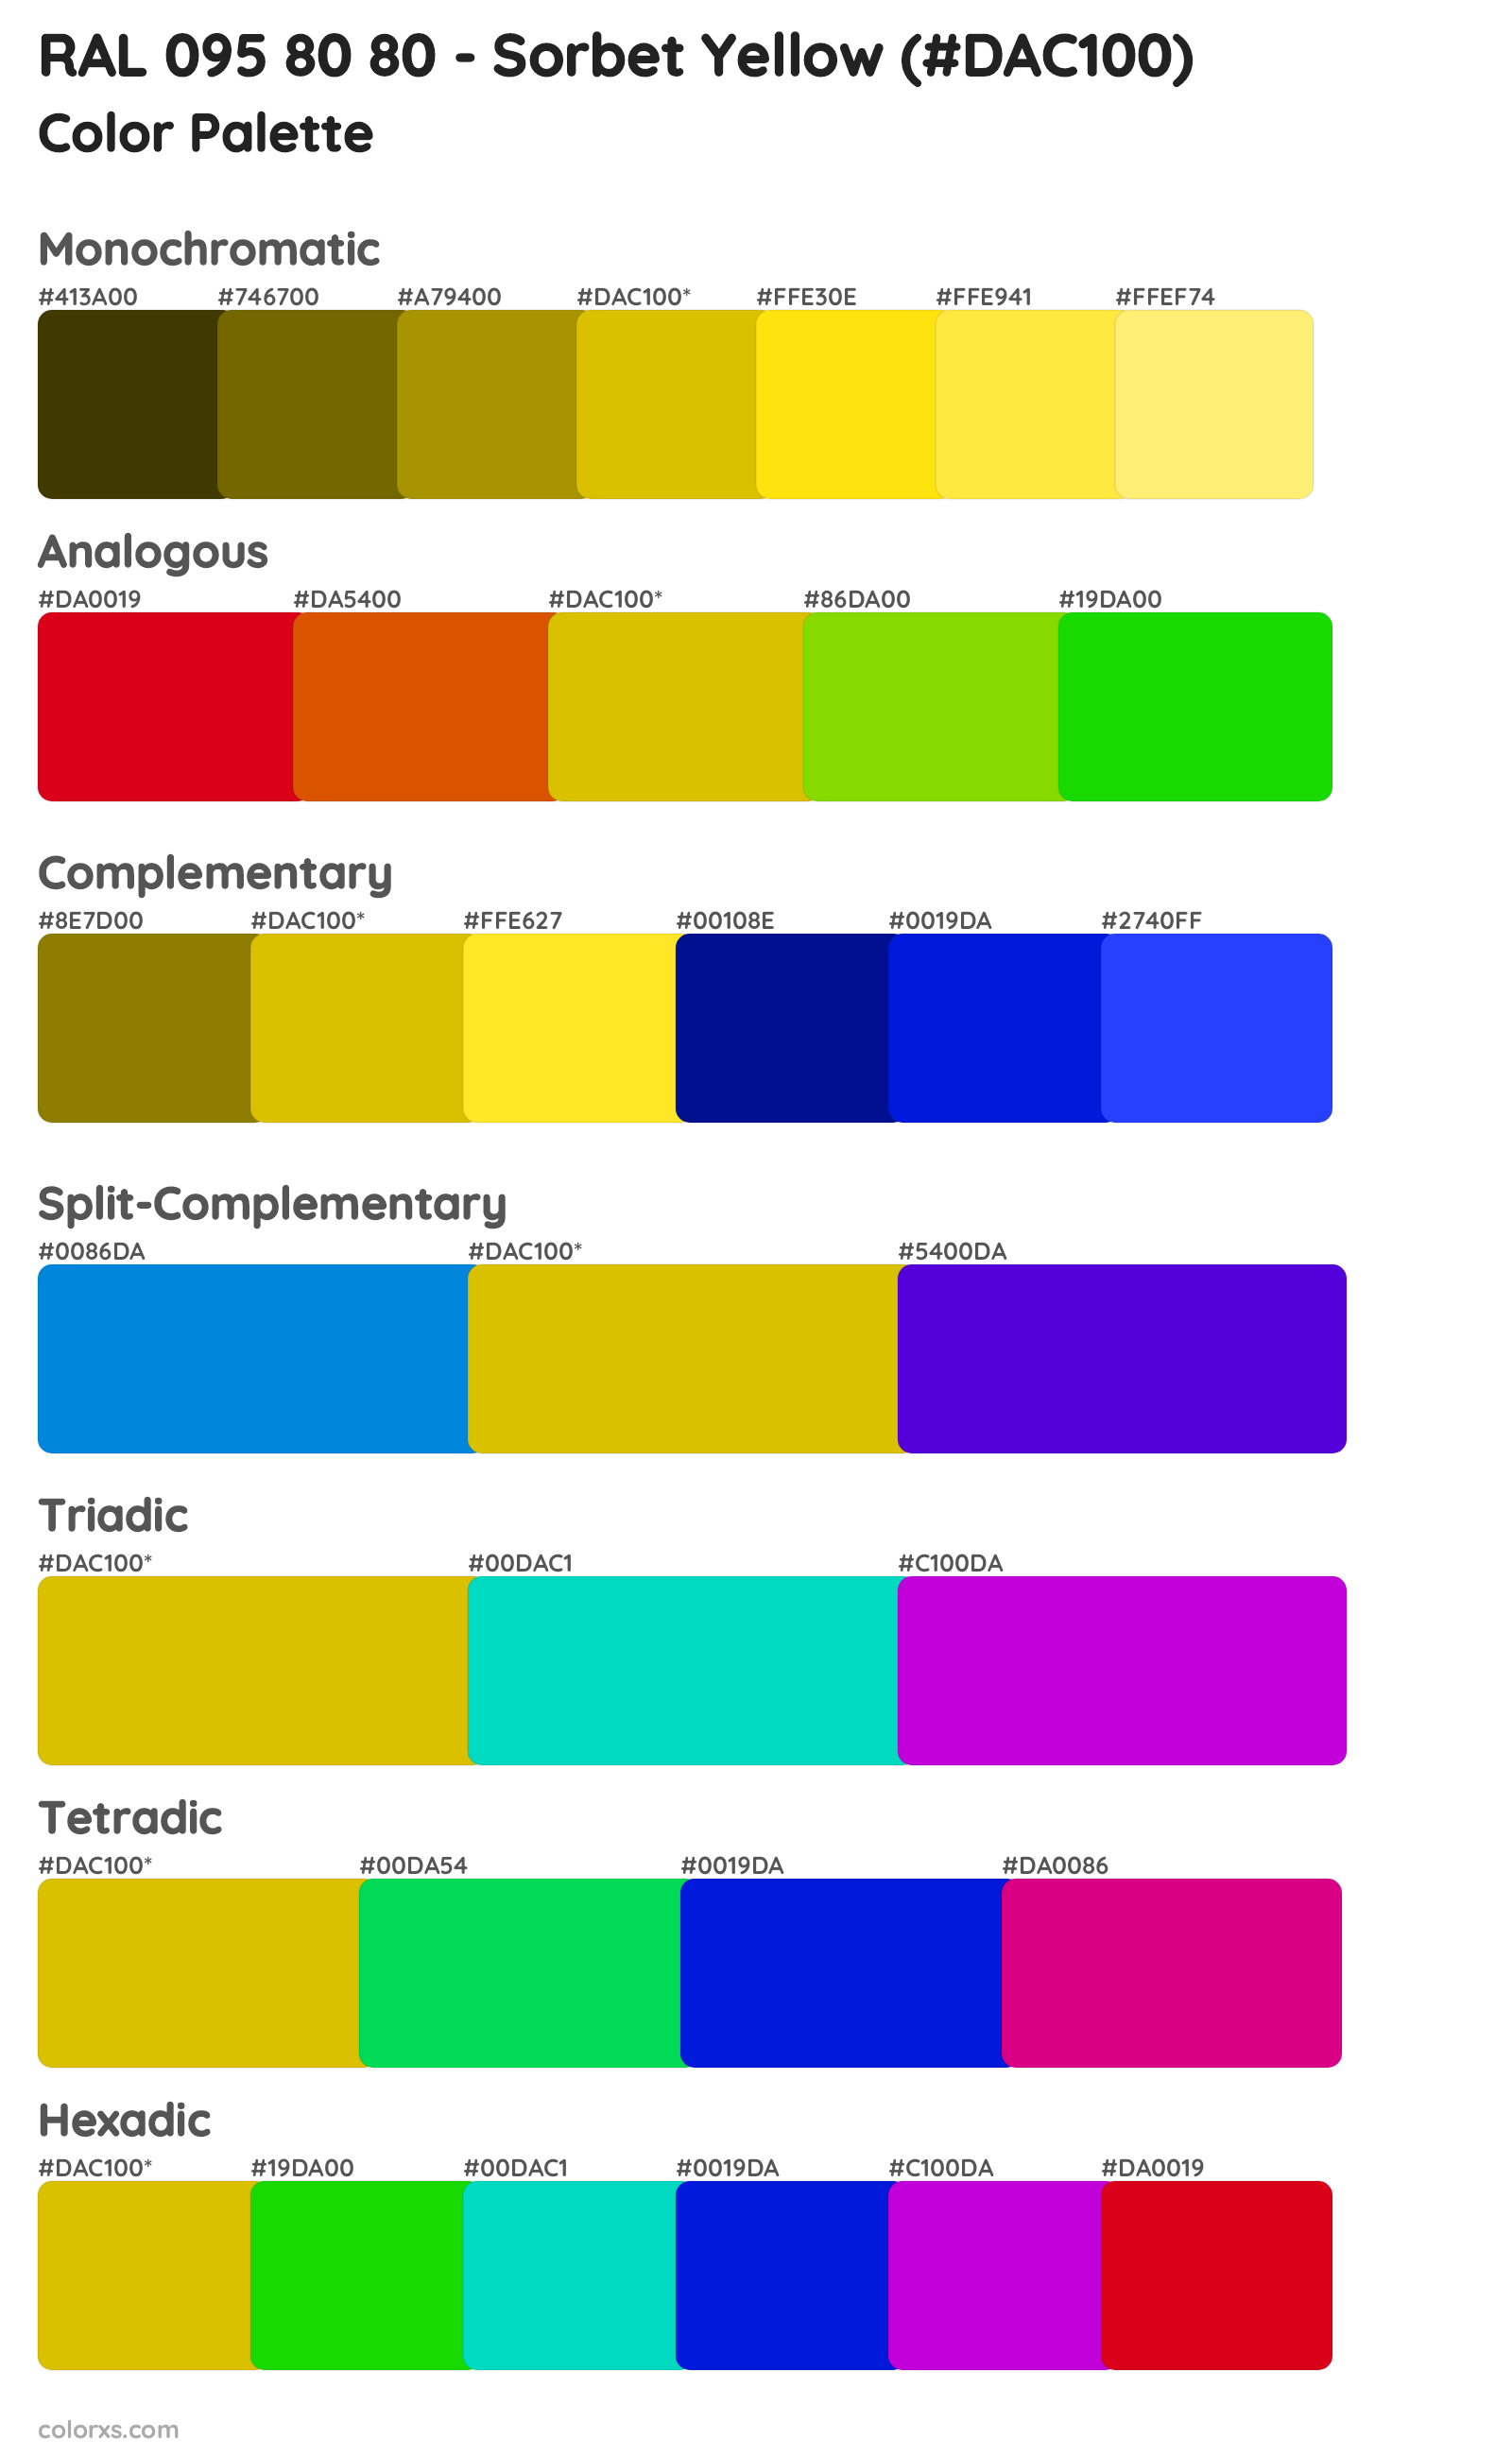 RAL 095 80 80 - Sorbet Yellow Color Scheme Palettes